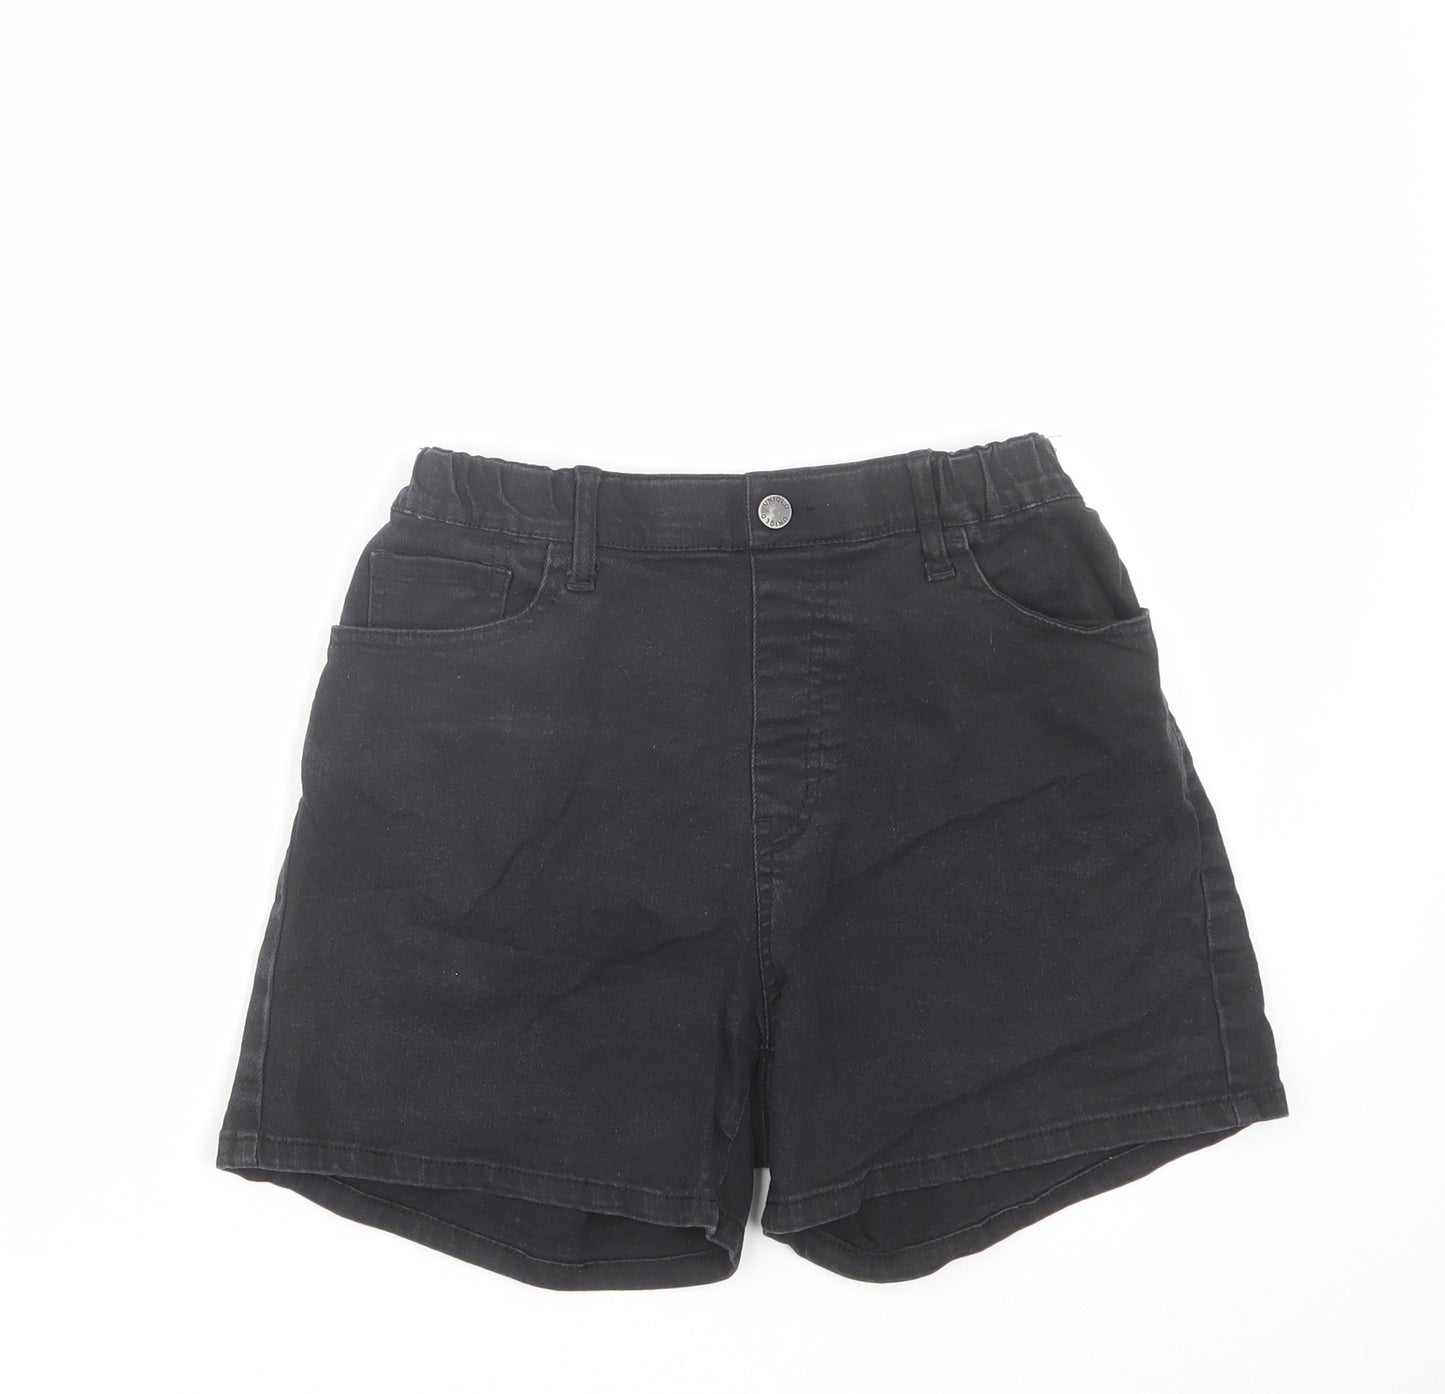 Uniqlo Girls Black Cotton Bermuda Shorts Size 12 Years Regular Zip